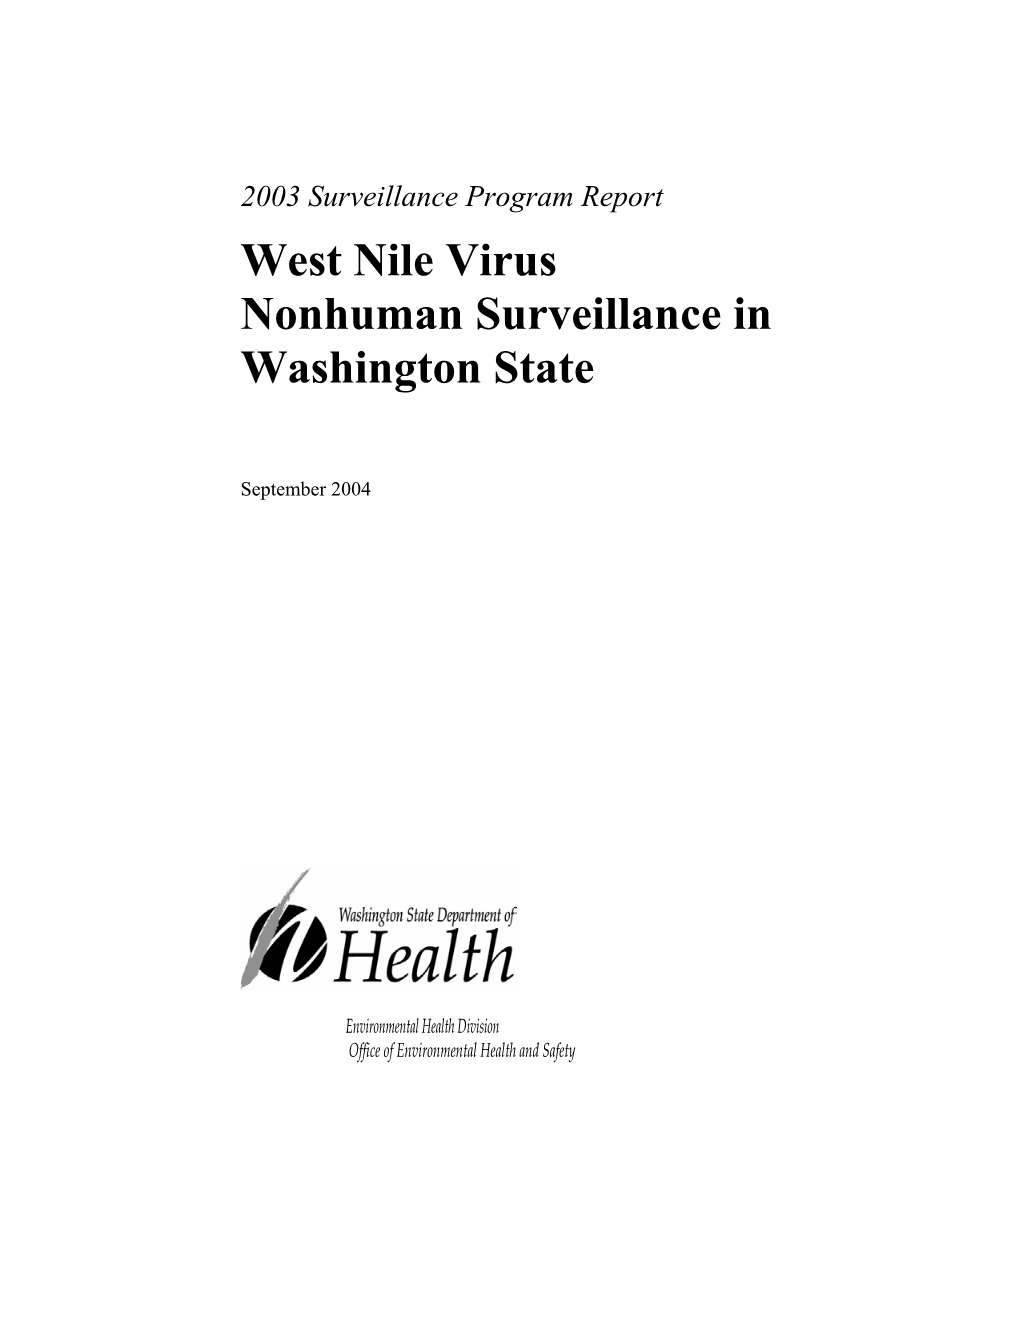 West Nile Virus Nonhuman Surveillance in Washington State